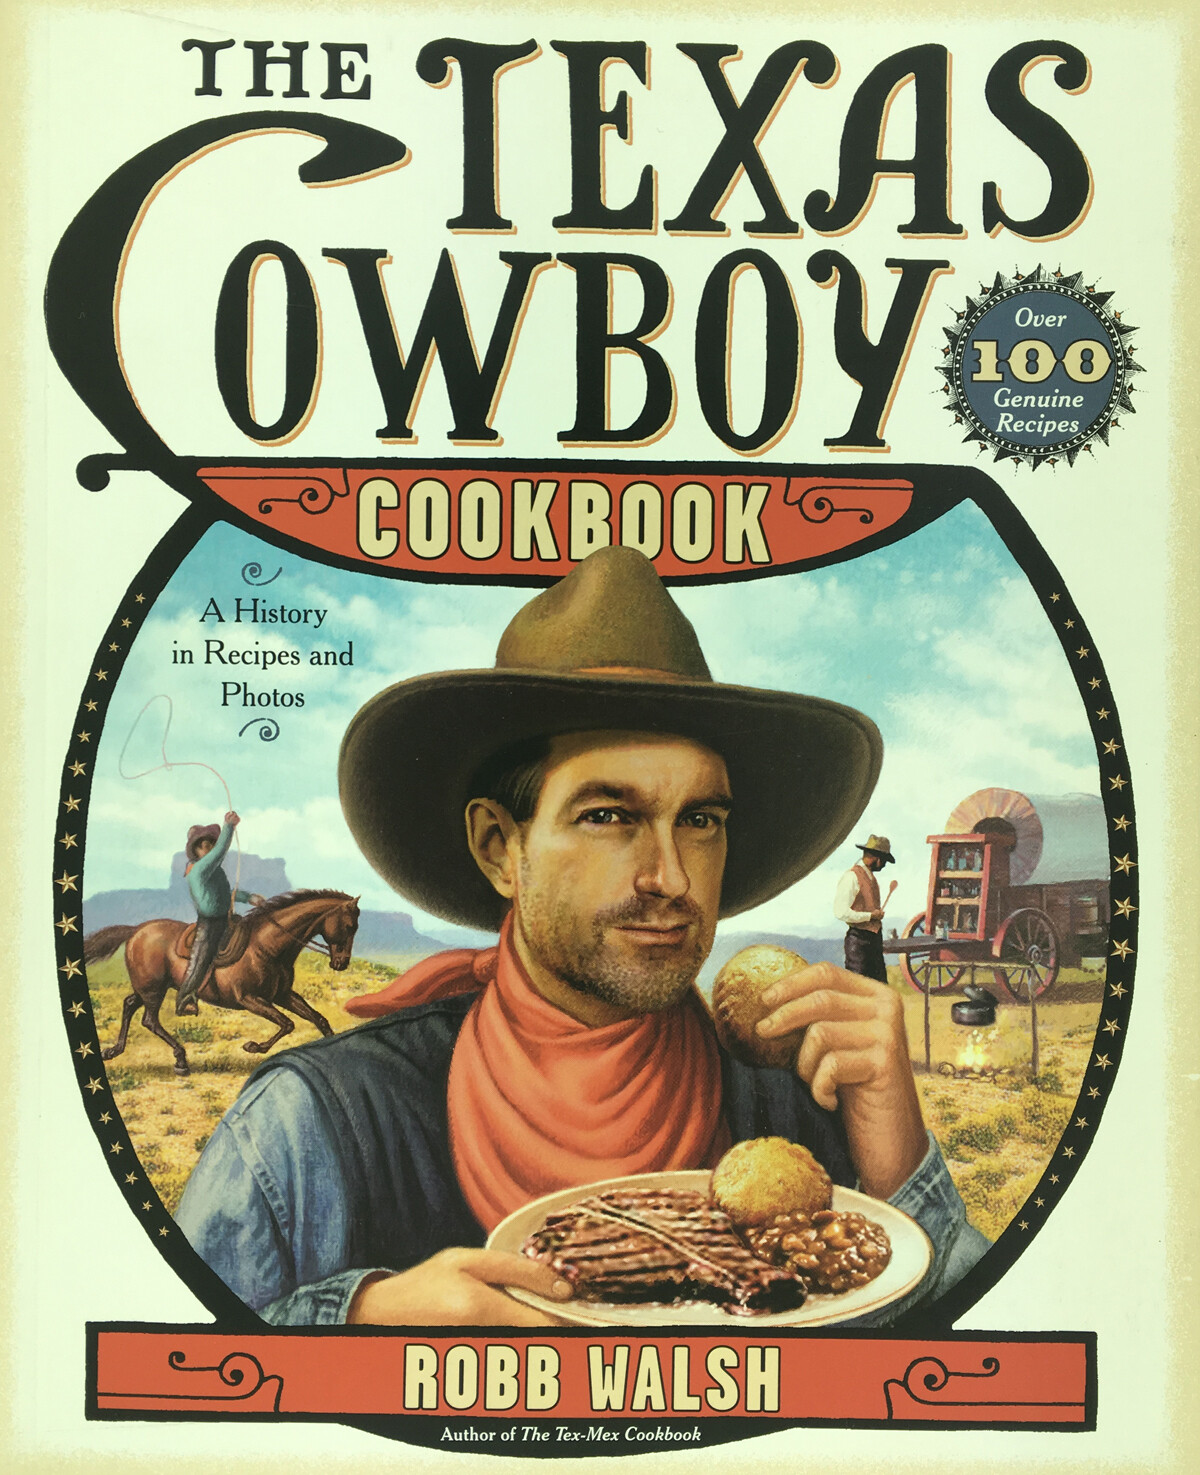 The Texas Cowboy Cookbook